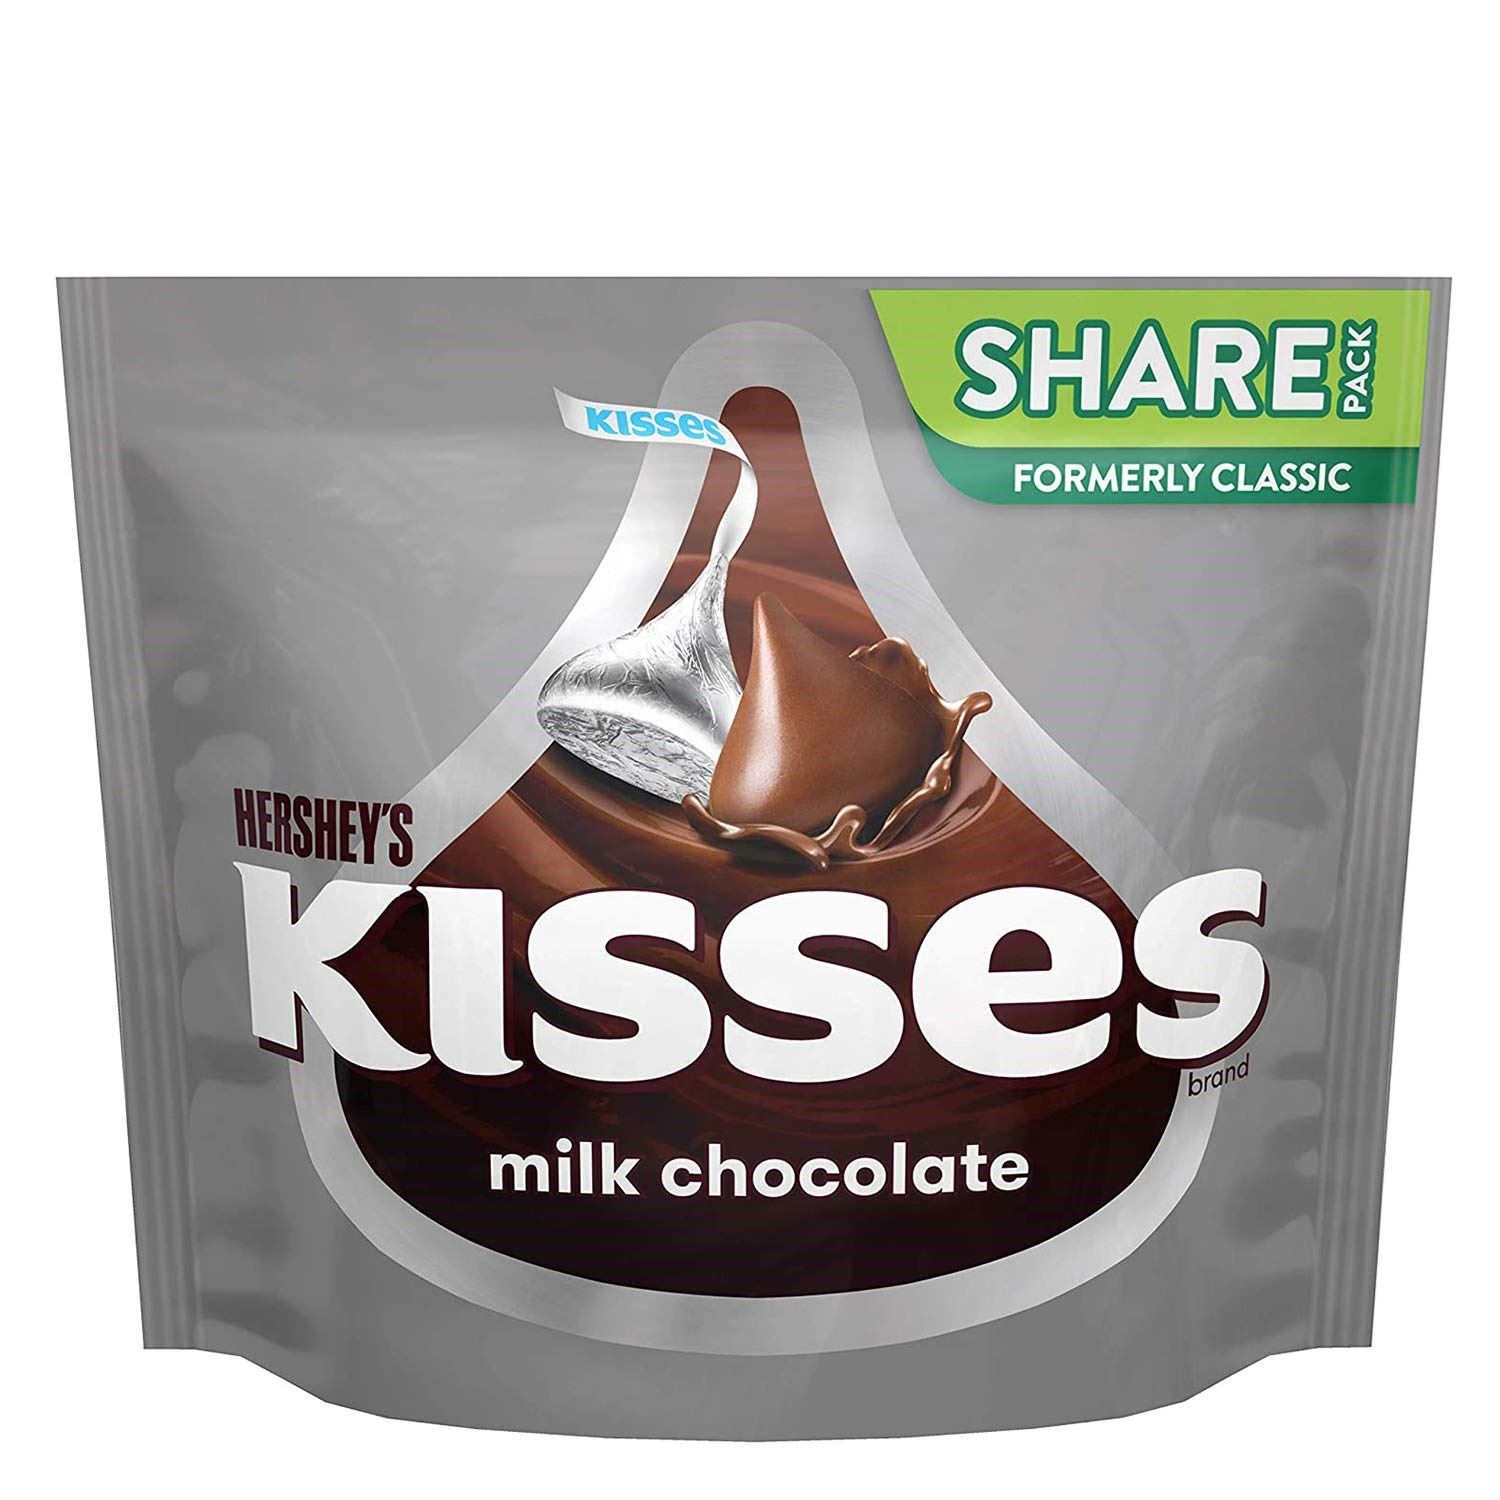 Hershey's Kisses Milk Chocolate Sütlü Çikolata 306g Kısmet Şarküteri